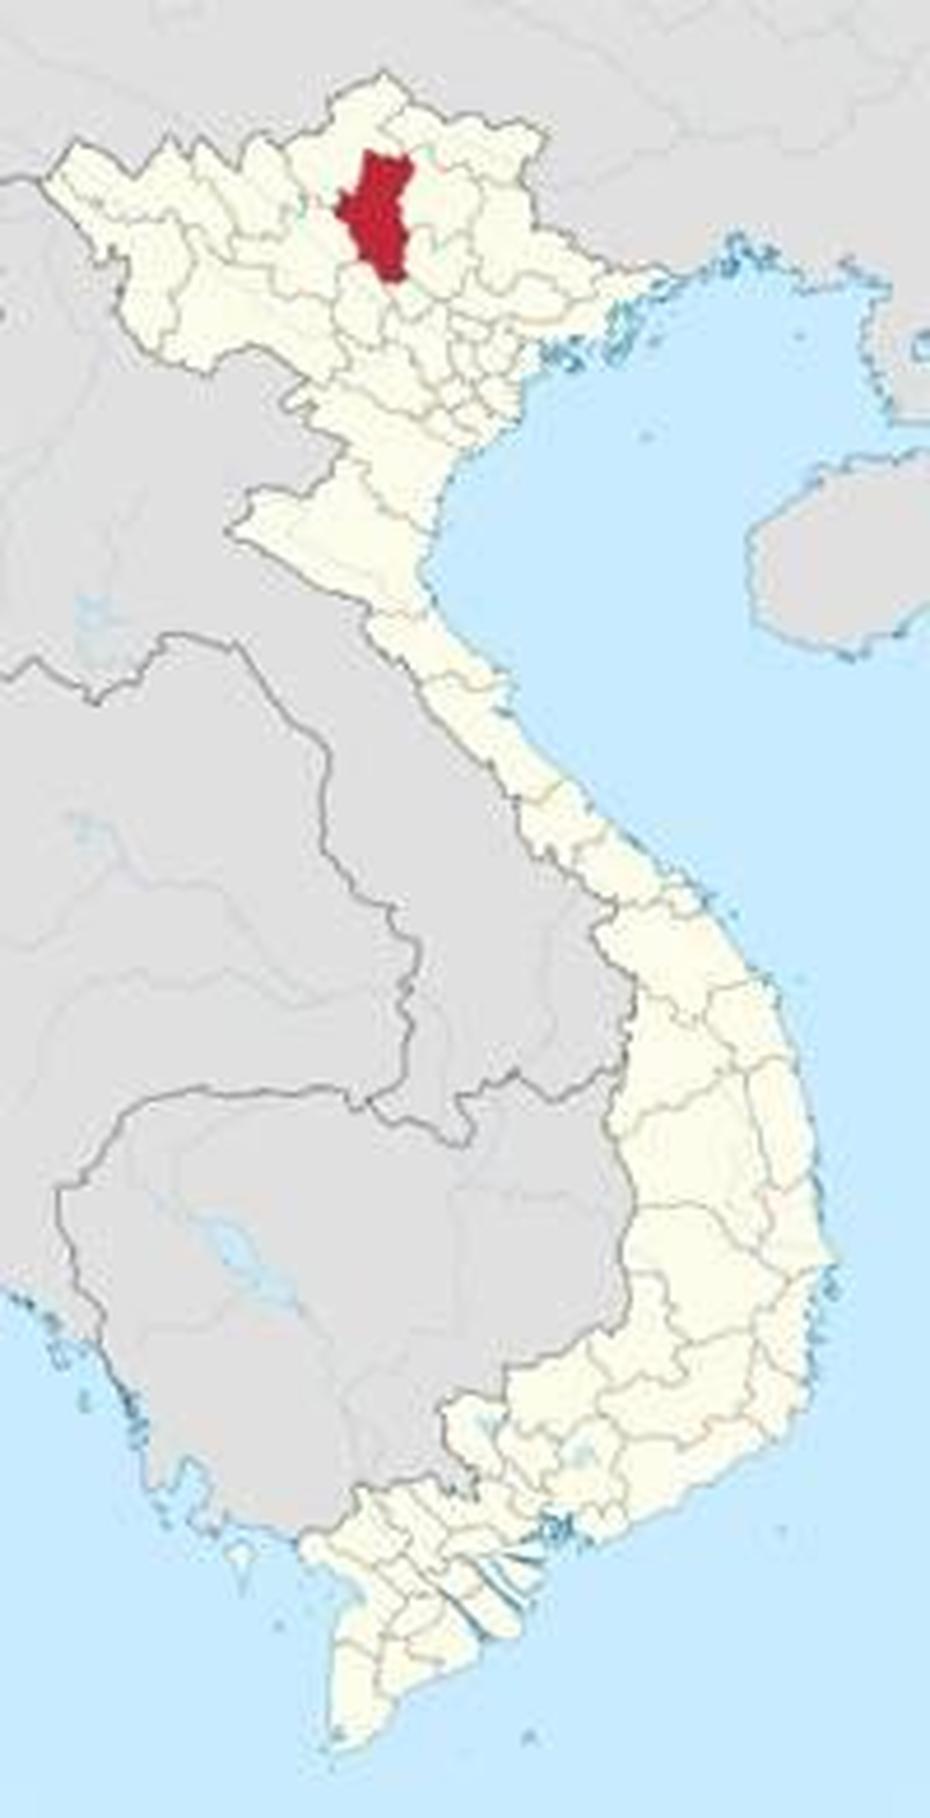 Quang Ngai Vietnam, Vietnam Islands, Tuyen Quang, Tuyên Quang, Vietnam